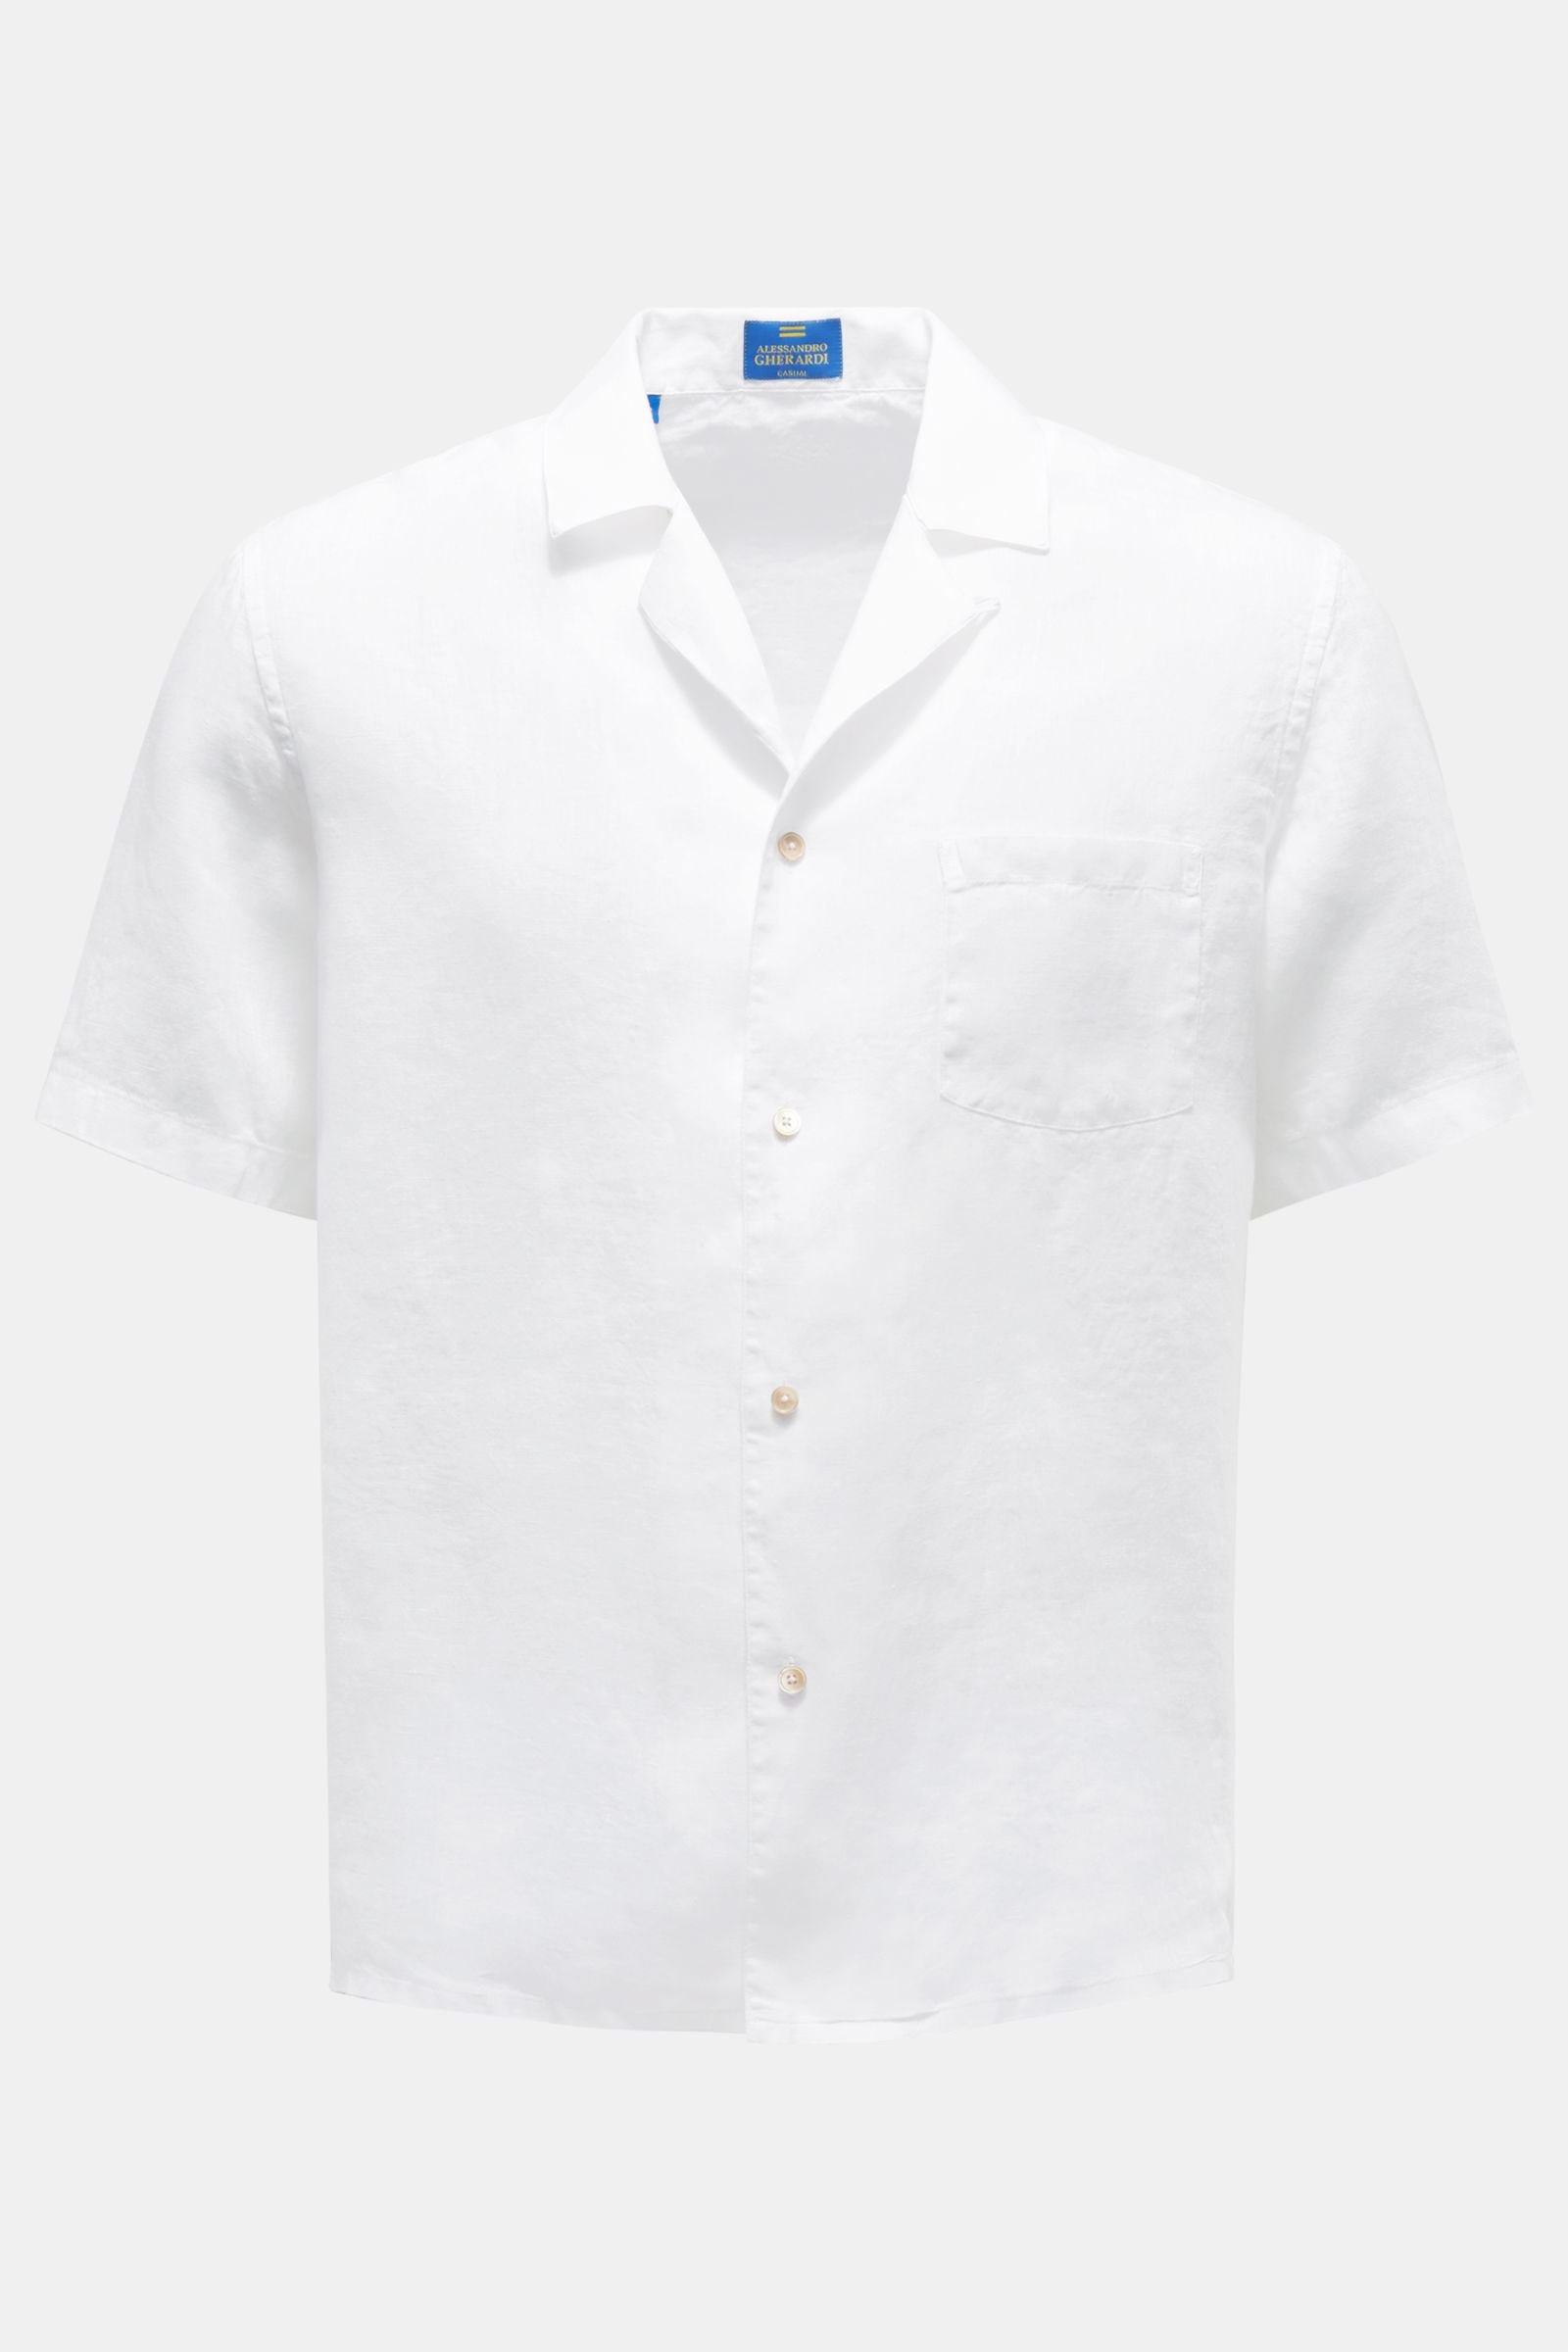 Linen short sleeve shirt 'Miami' Cuban collar white